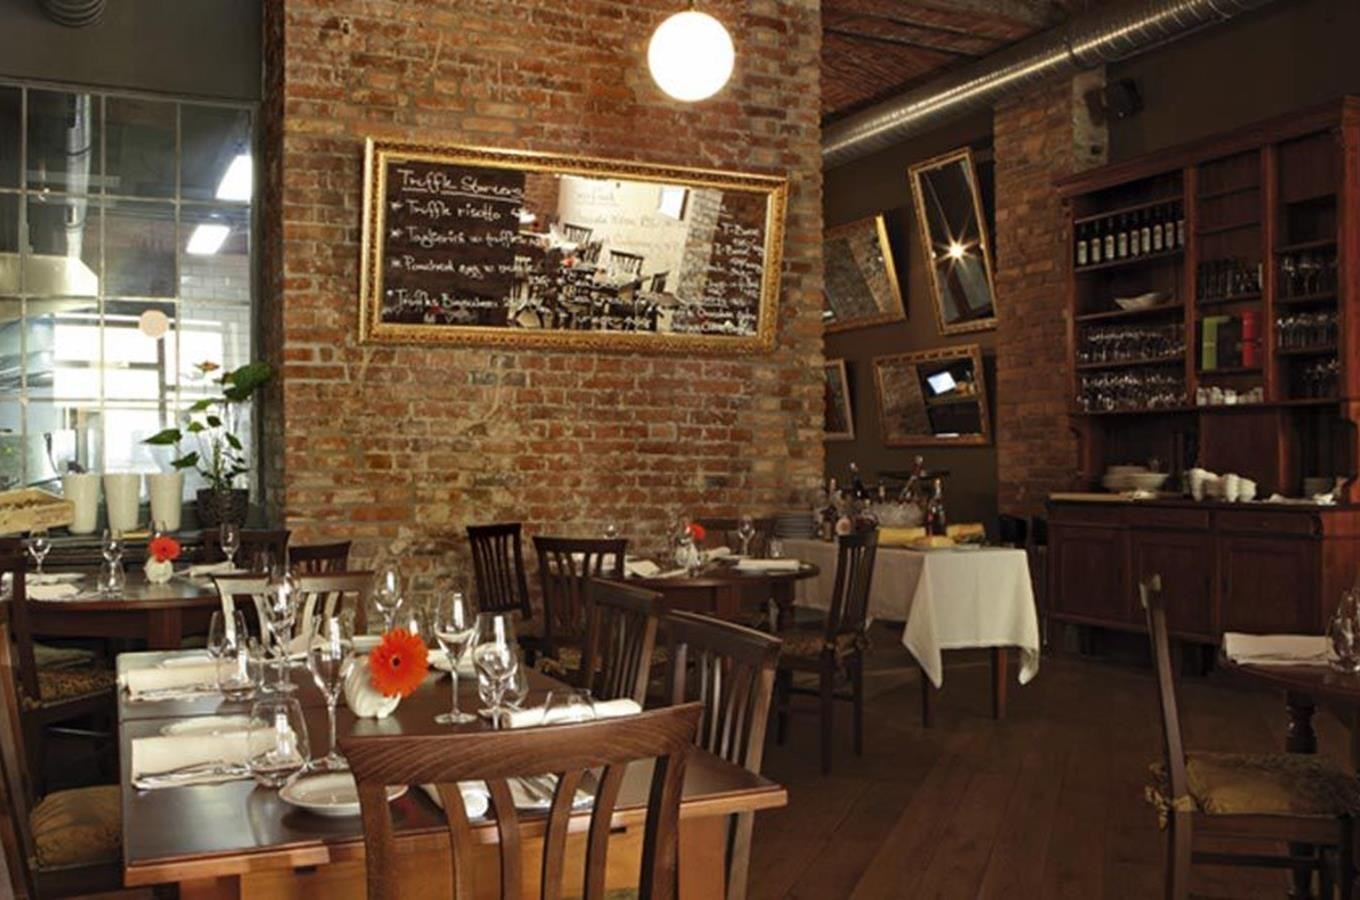 La Finestra In Cucina - restaurace v samotném centru Prahy